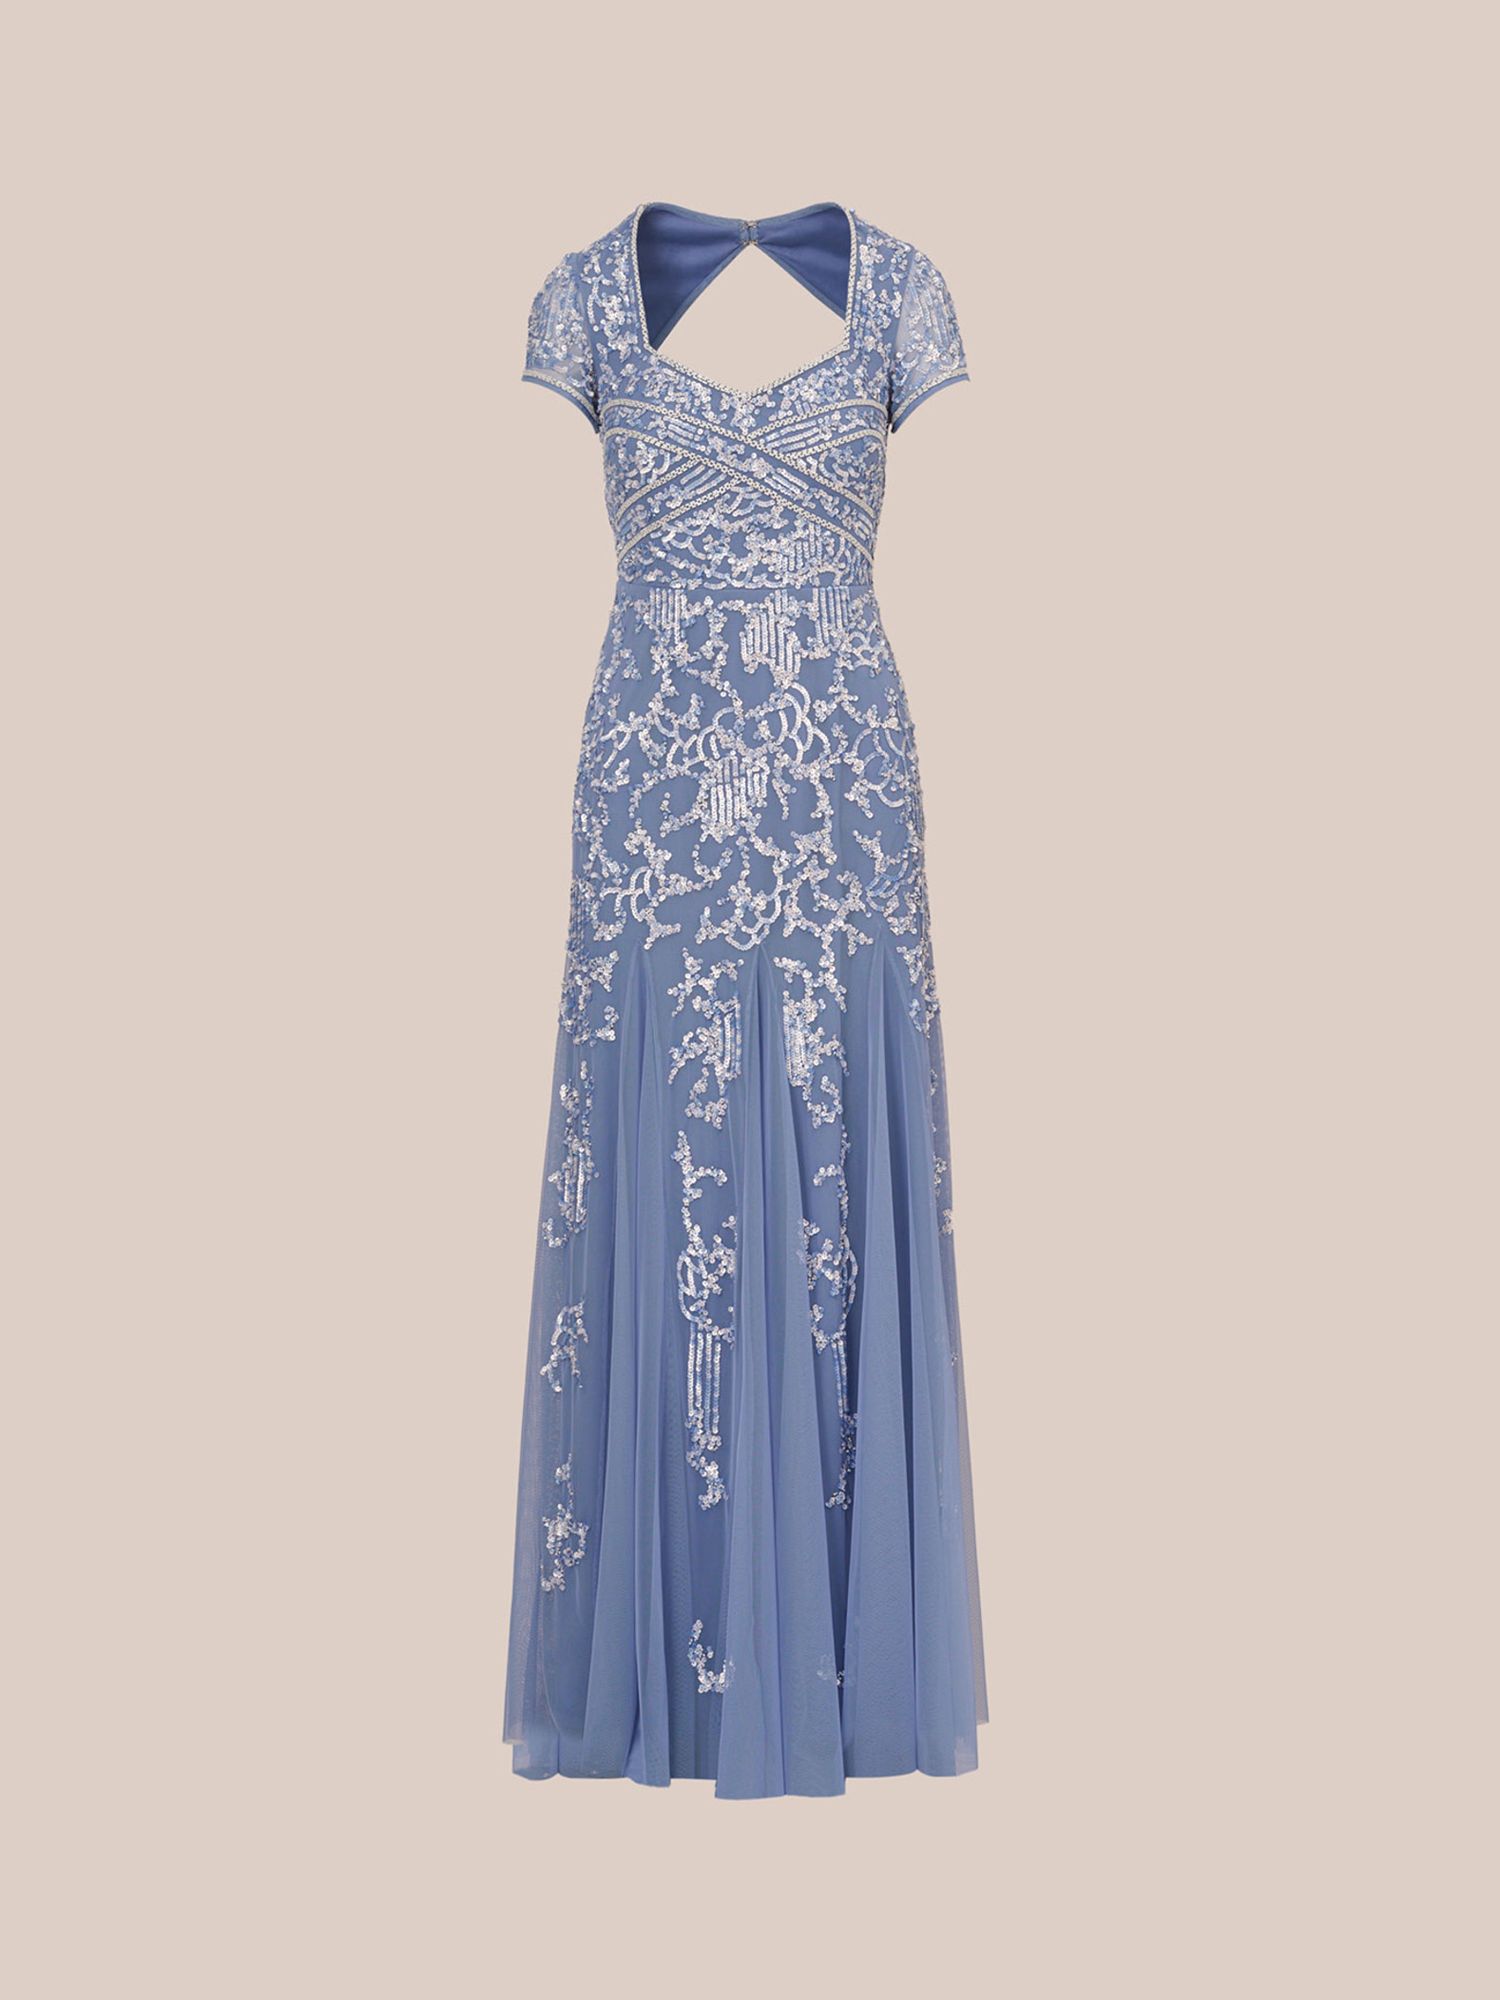 Adrianna Papell Beaded Godet Maxi Dress, French Blue, 6